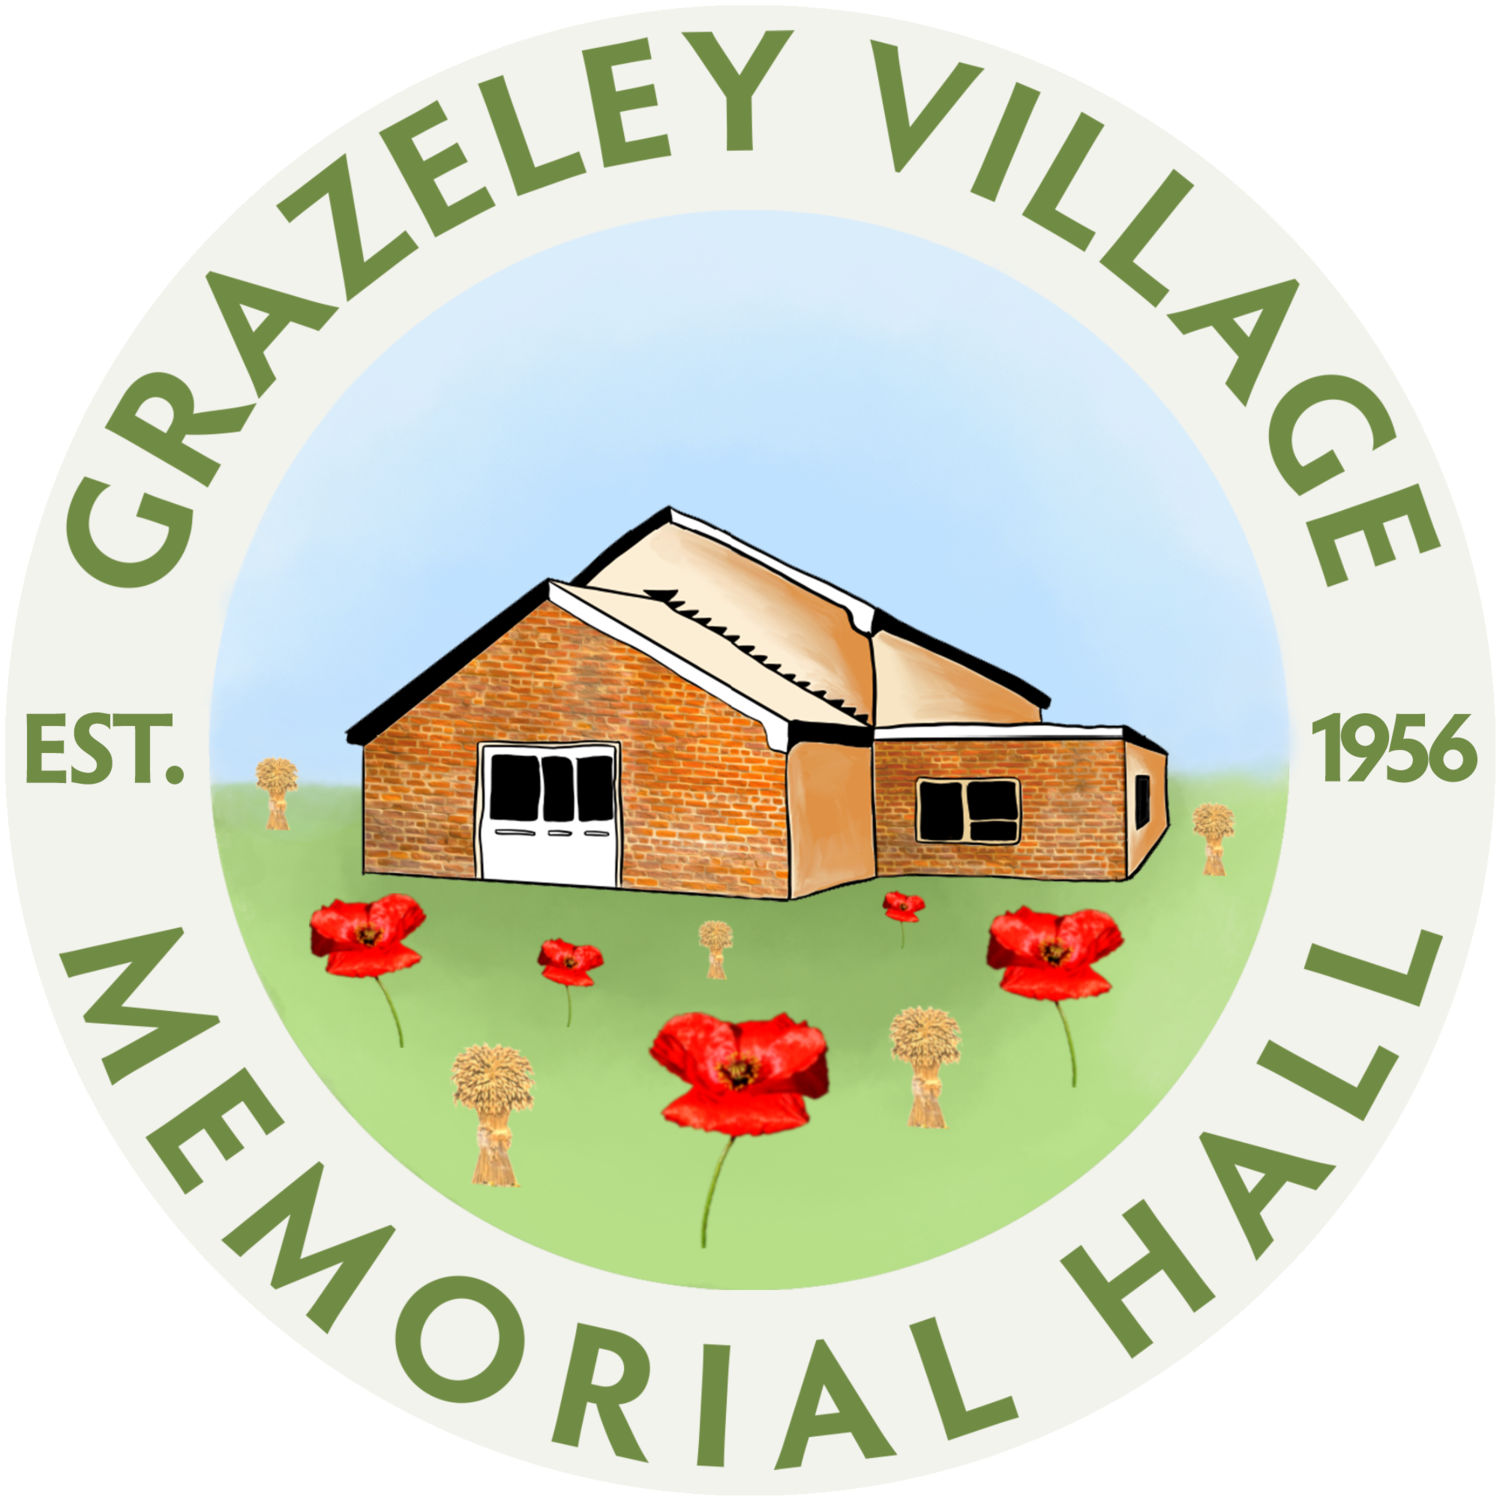 Grazeley Village Memorial Hall